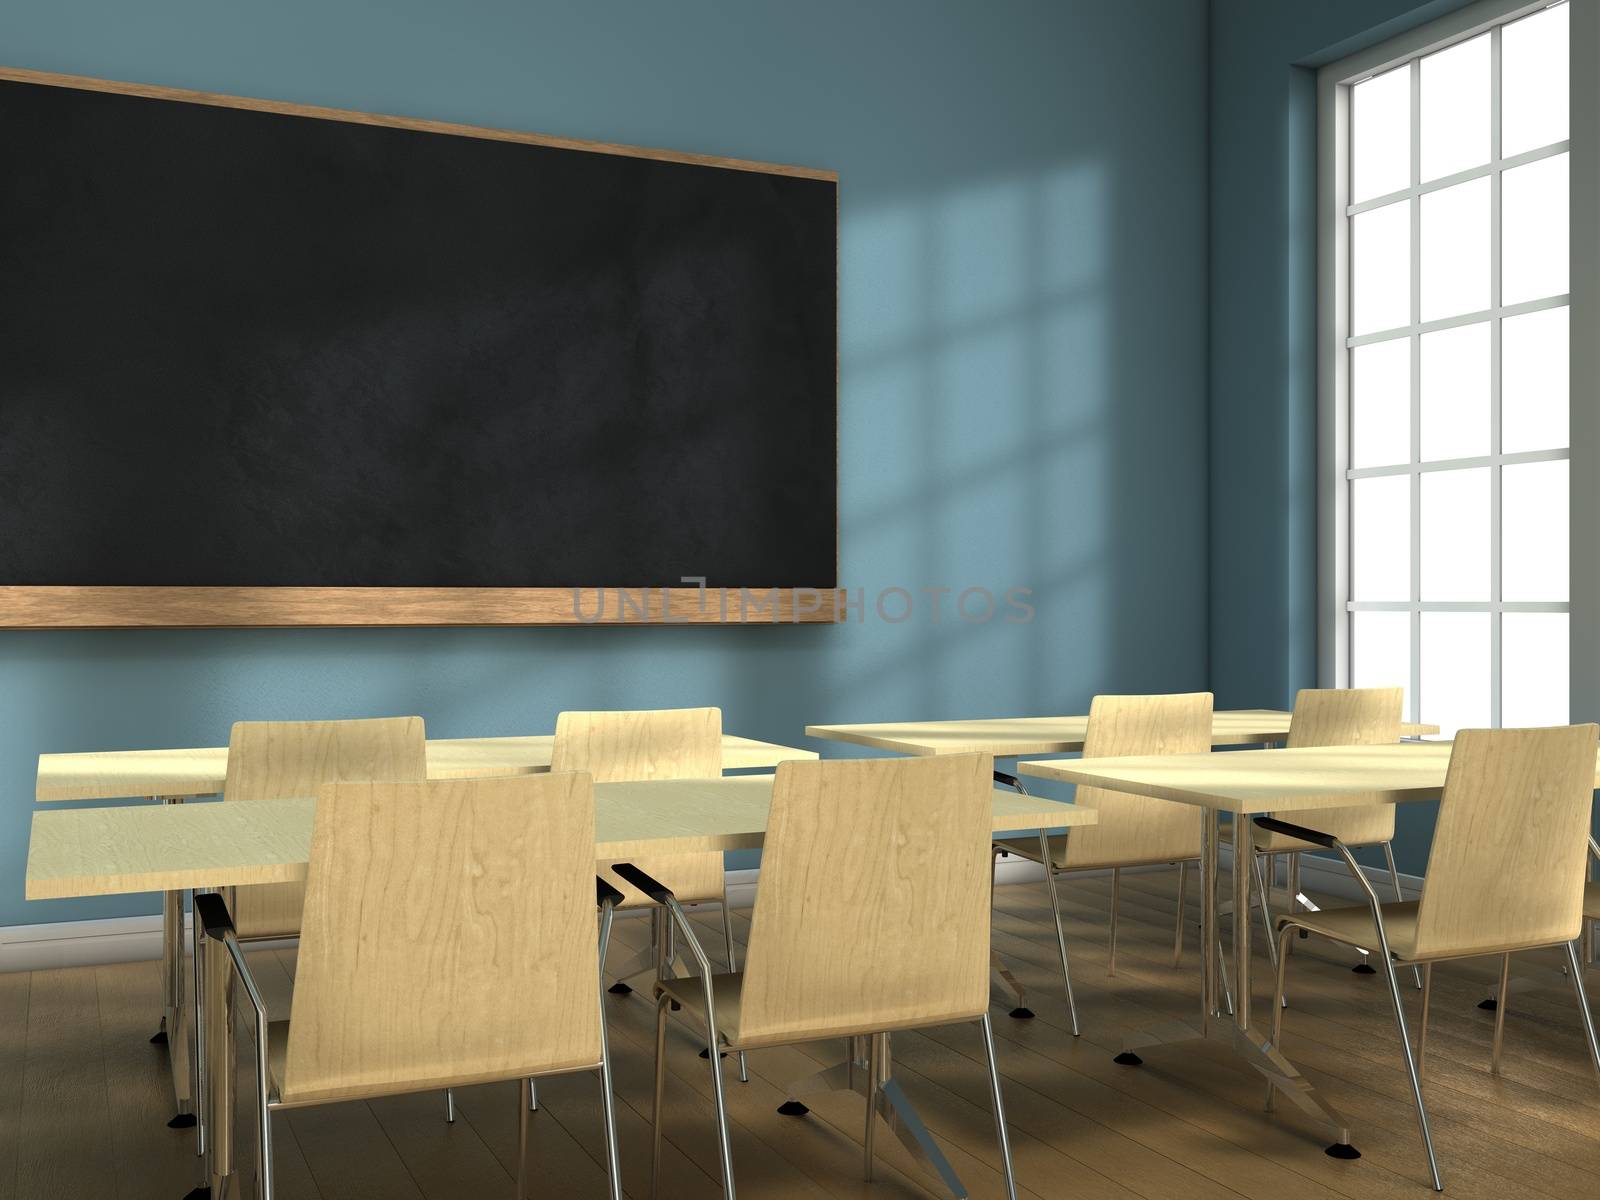 Blackboard and school desks background